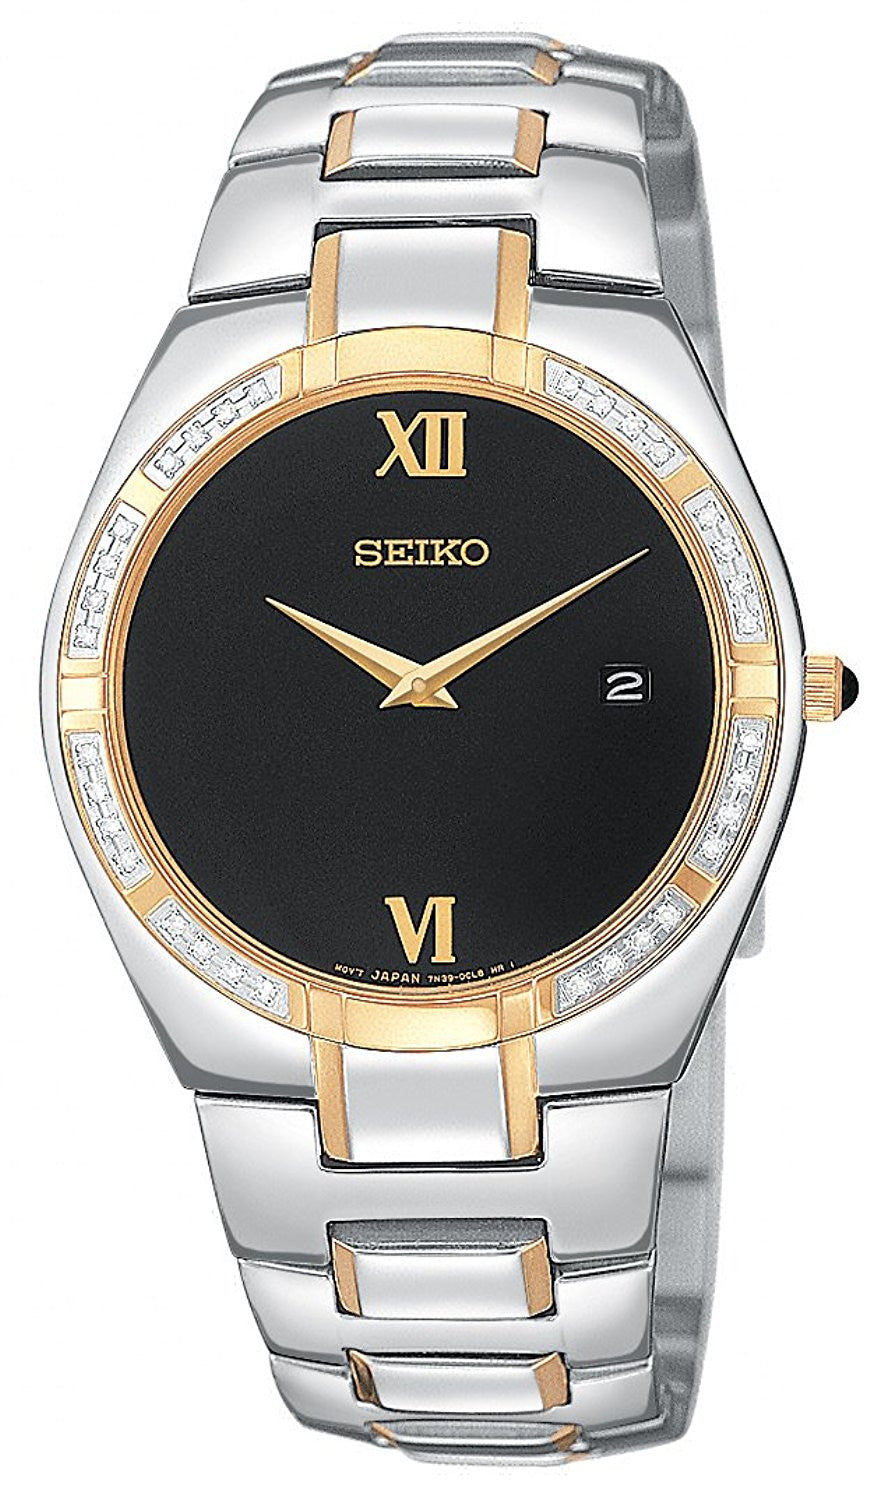 Seiko Men's SKP338 Diamond Dress Two-Tone Watch